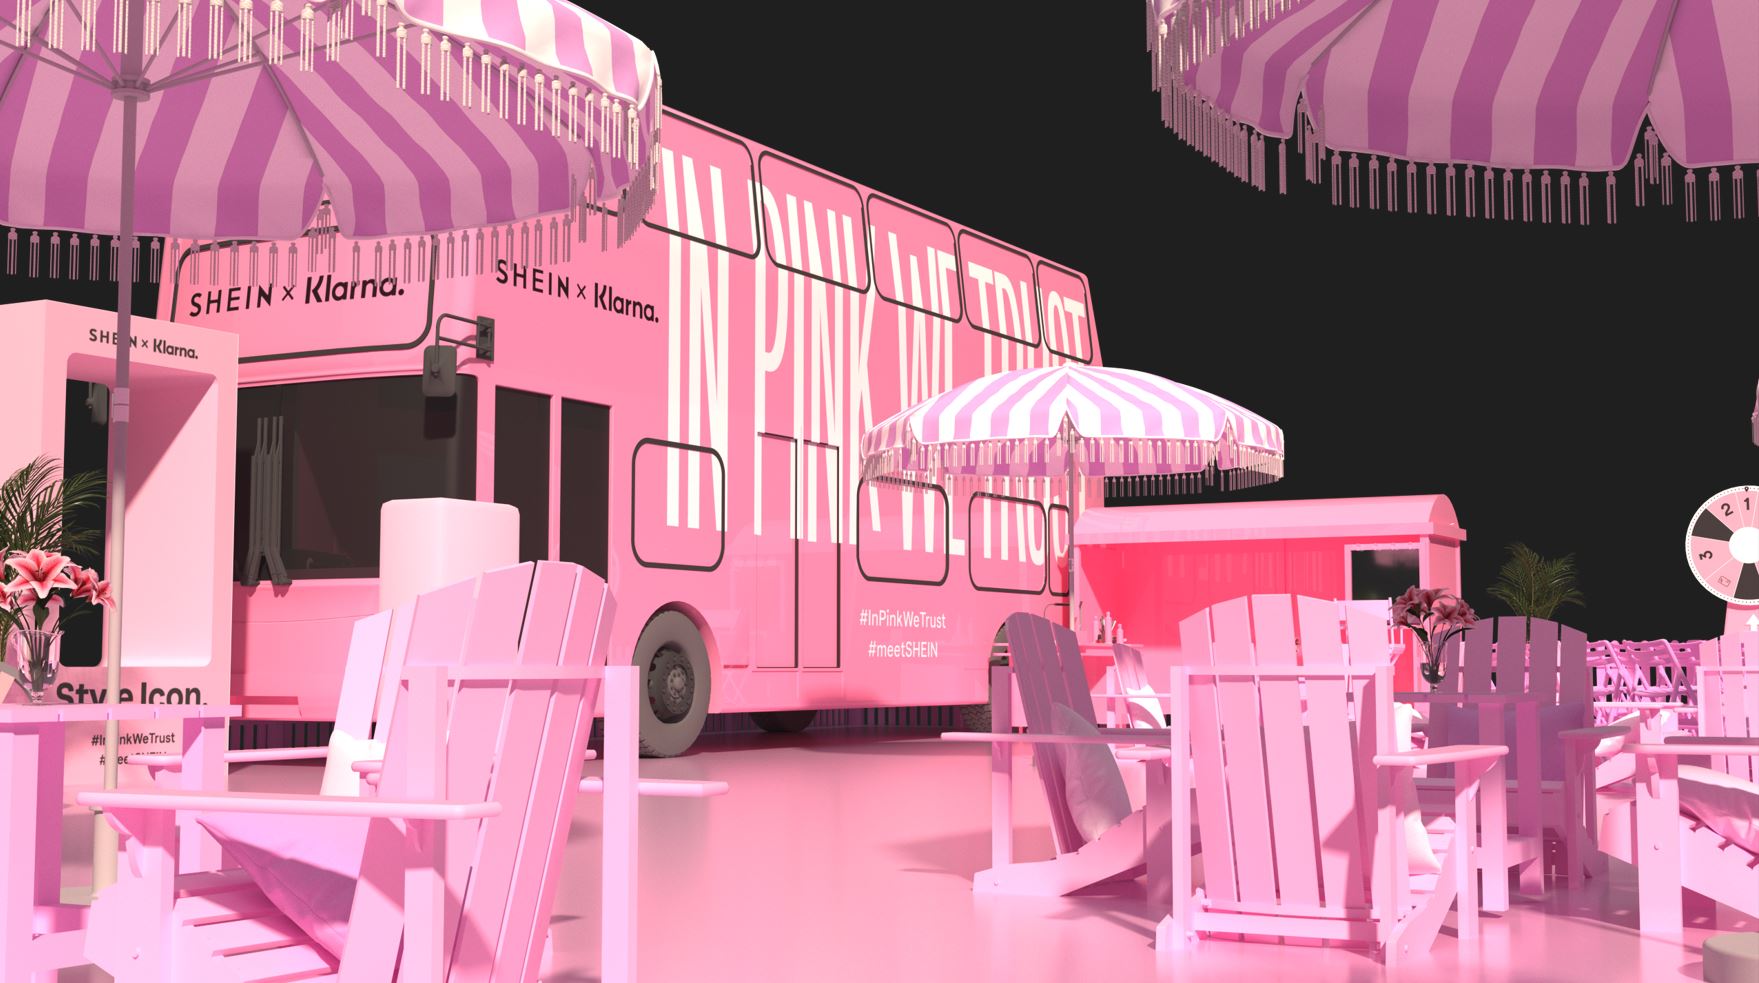 Shein & Klarna Pink Bus Exterior and decking